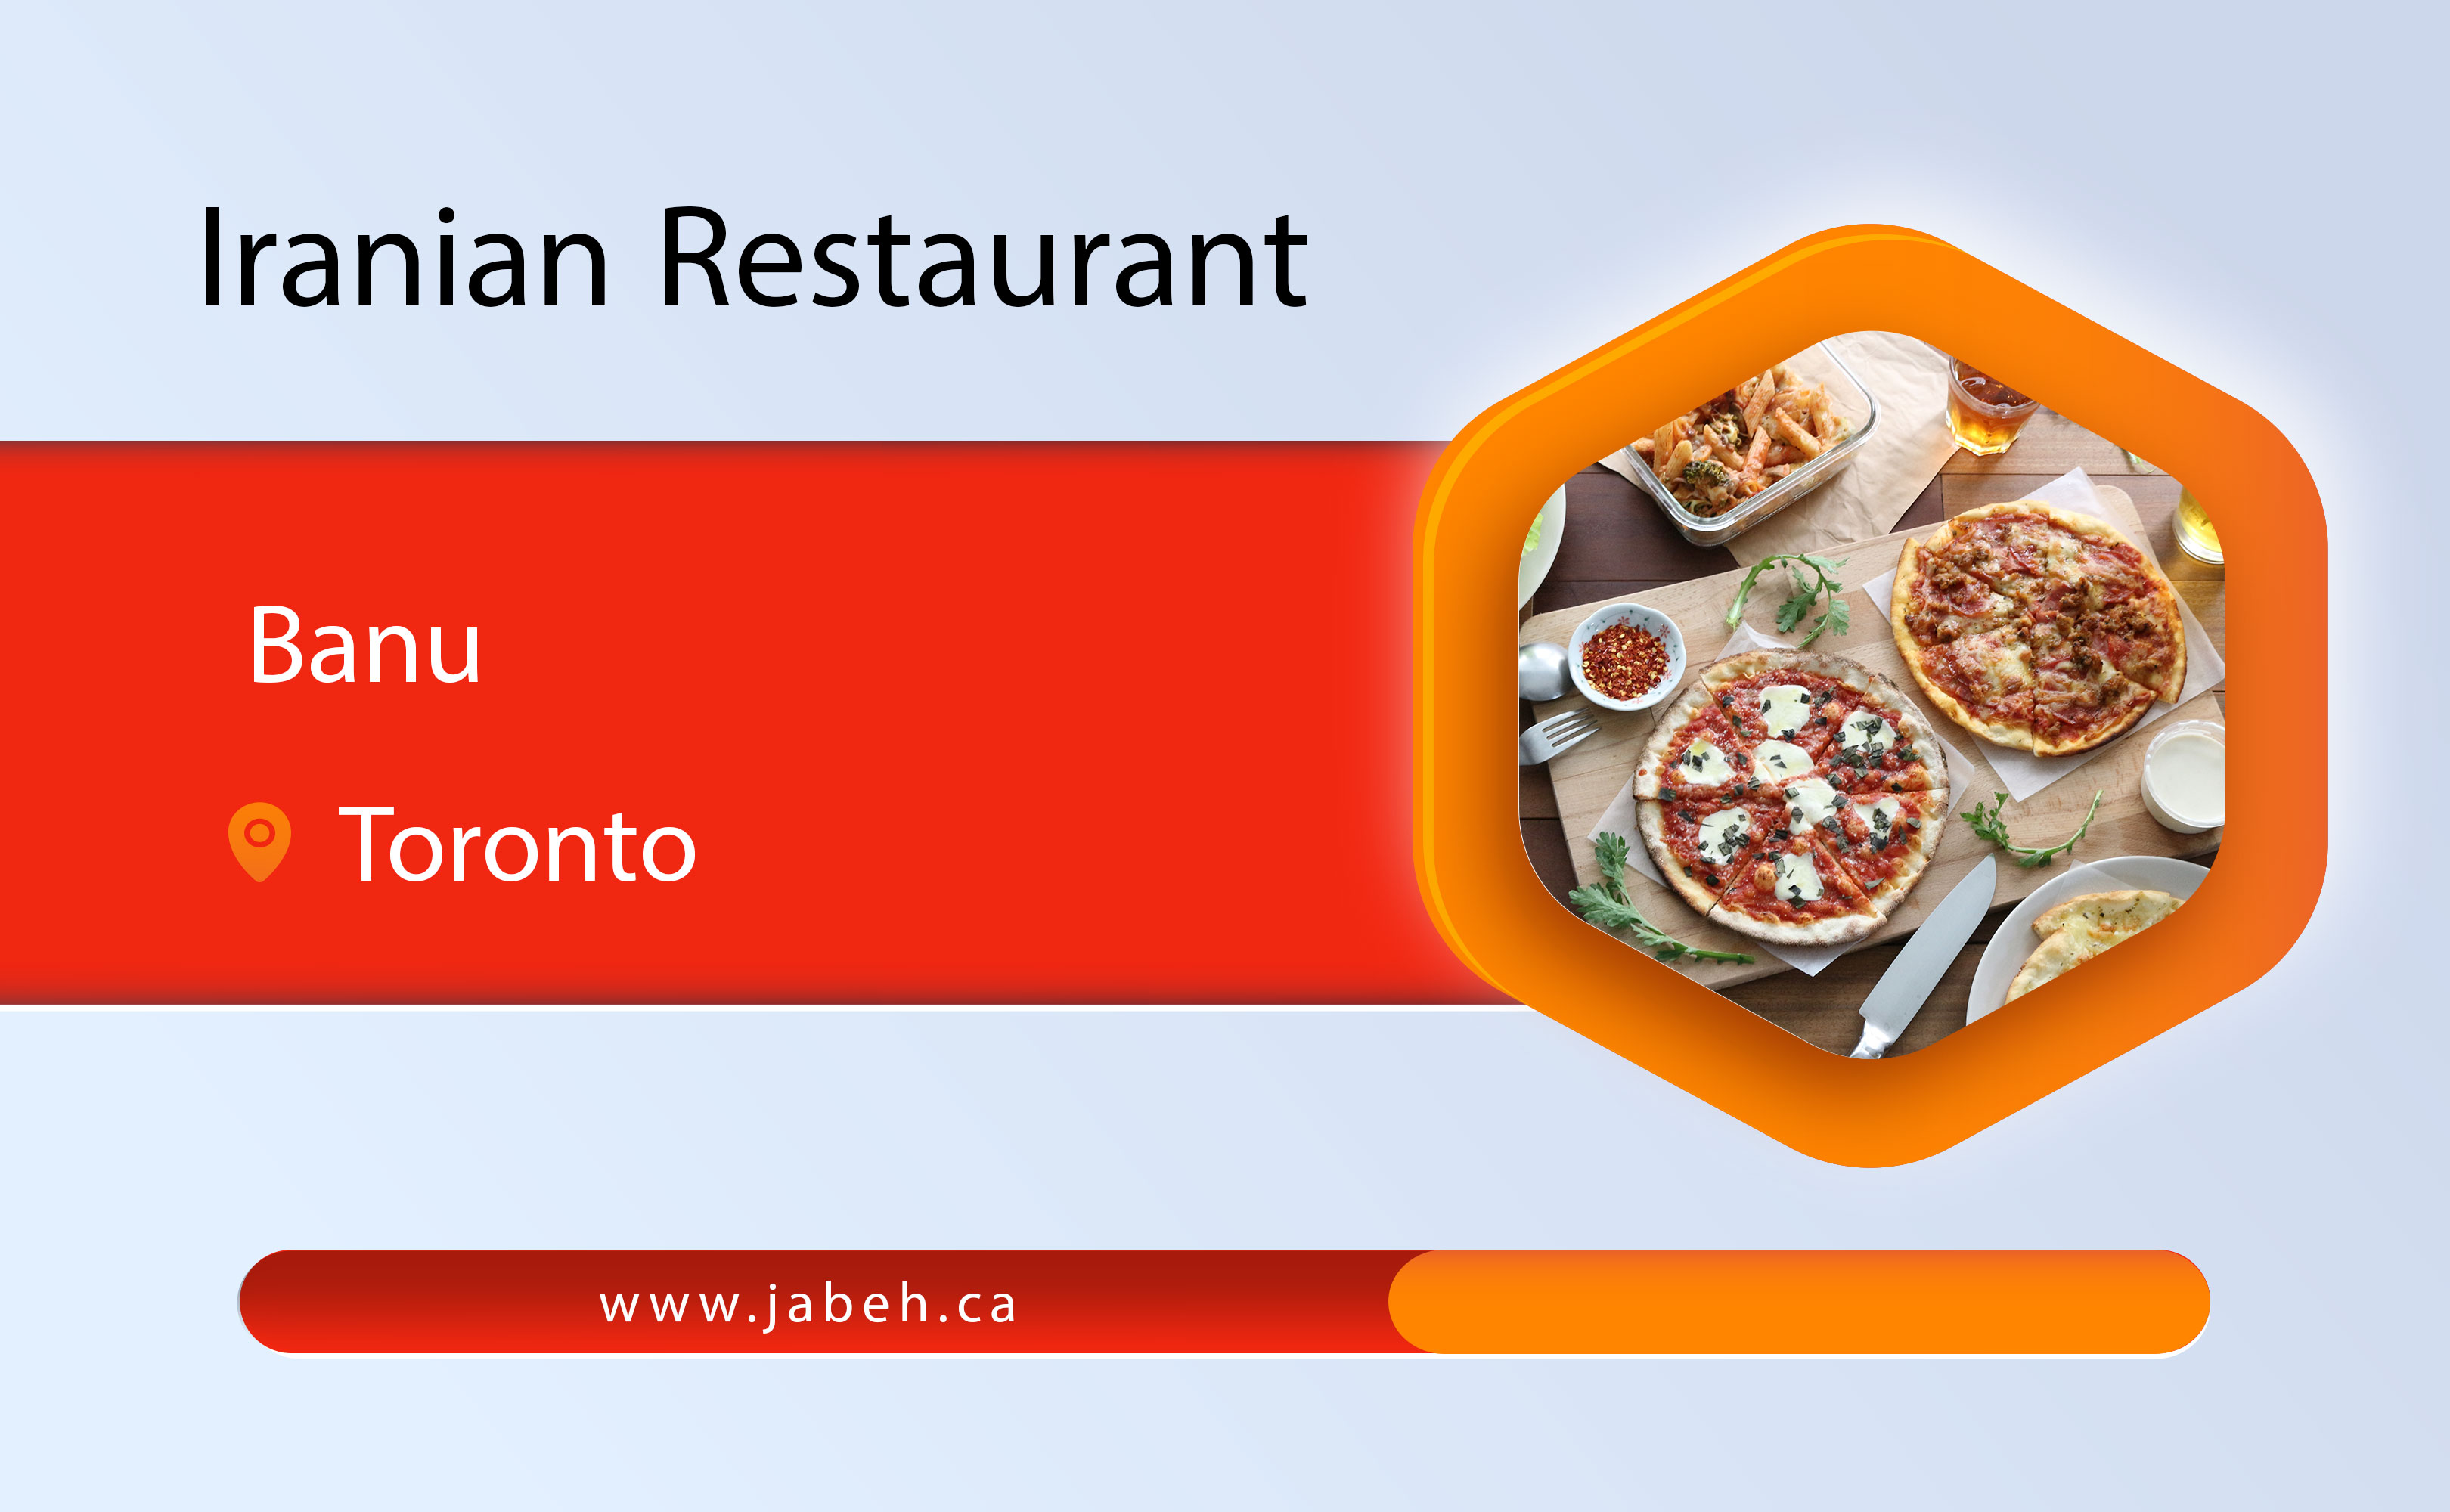 Banoo Iranian Restaurant in Toronto